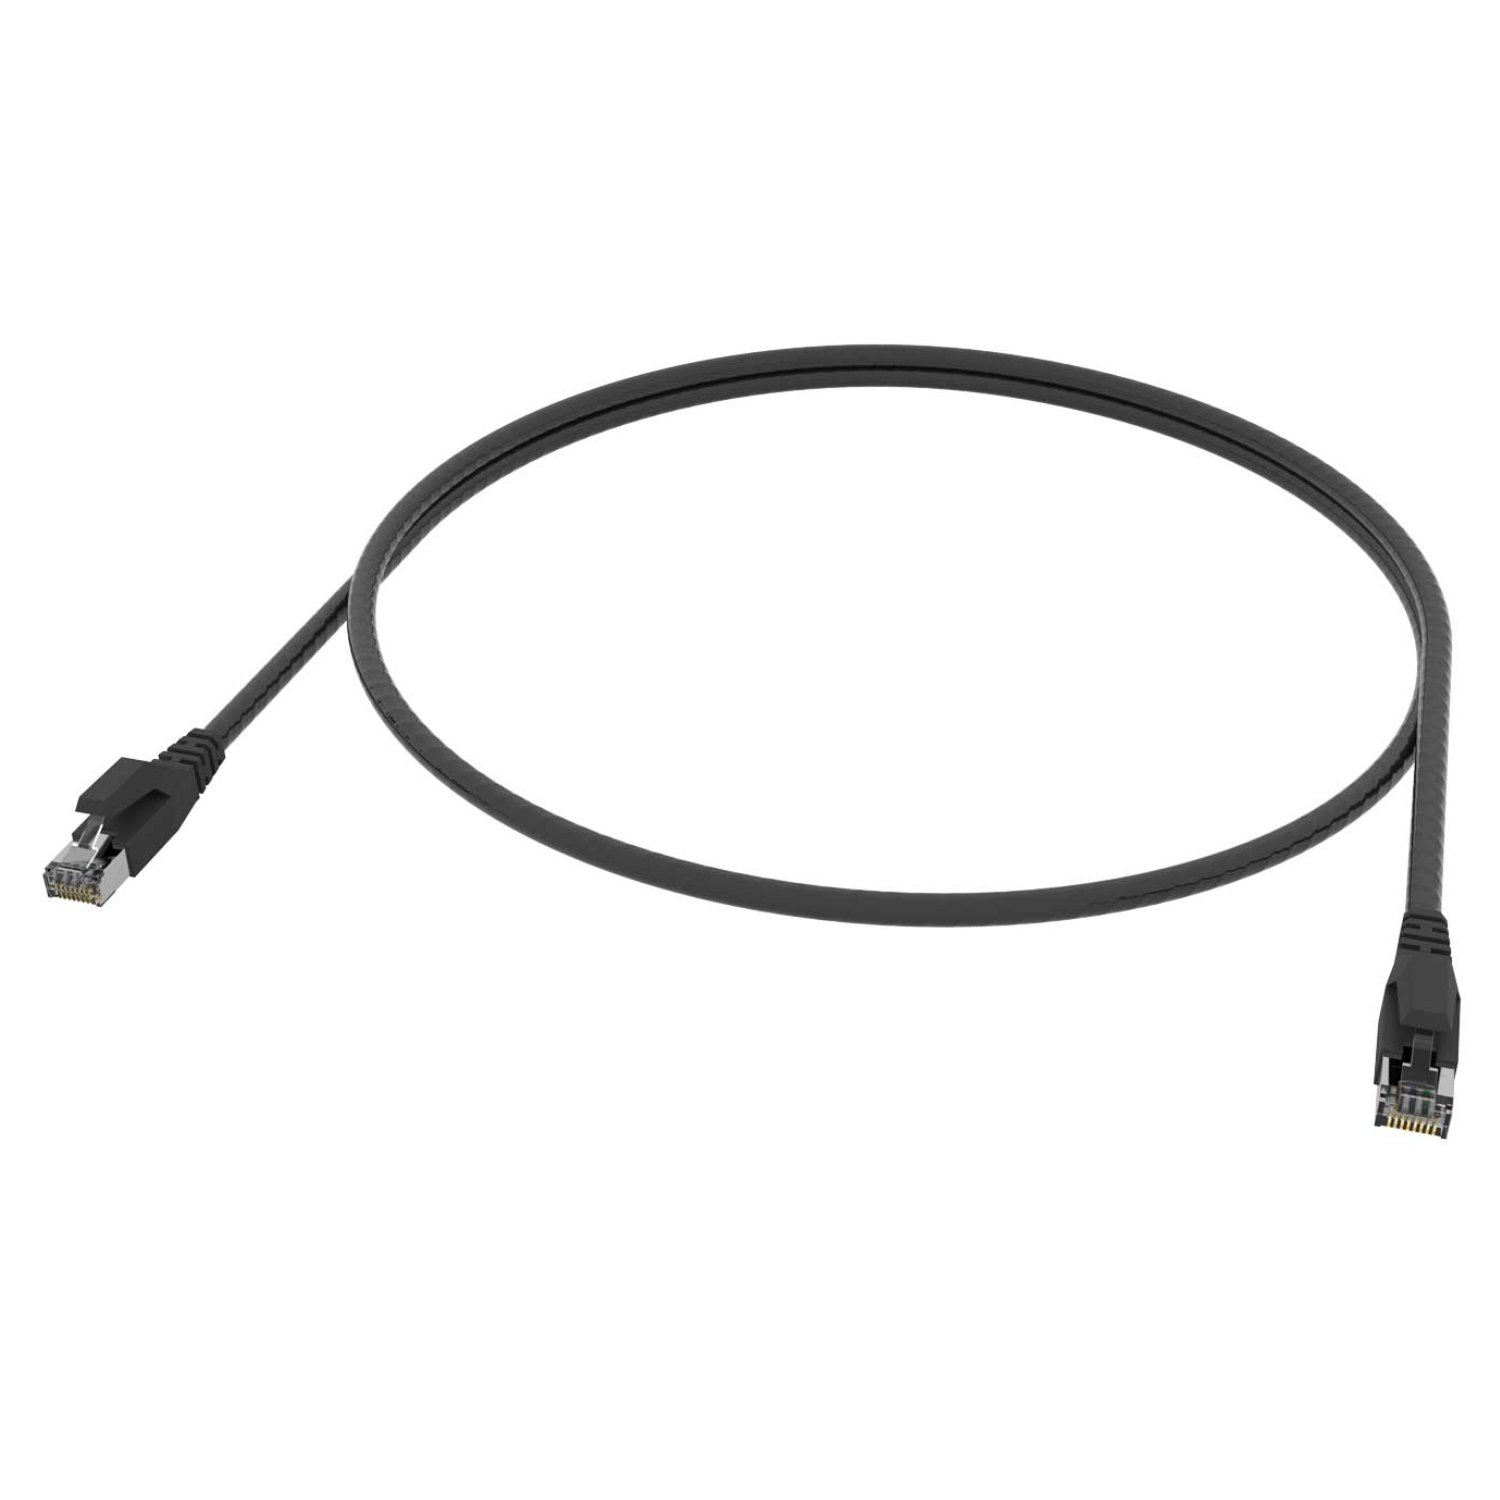 m 15,0 AIXONTEC Netzwerkkabel, Lankabel Gigabit, Outdoor 15,0m UV-Beständig Ethernetkabel RJ45 10